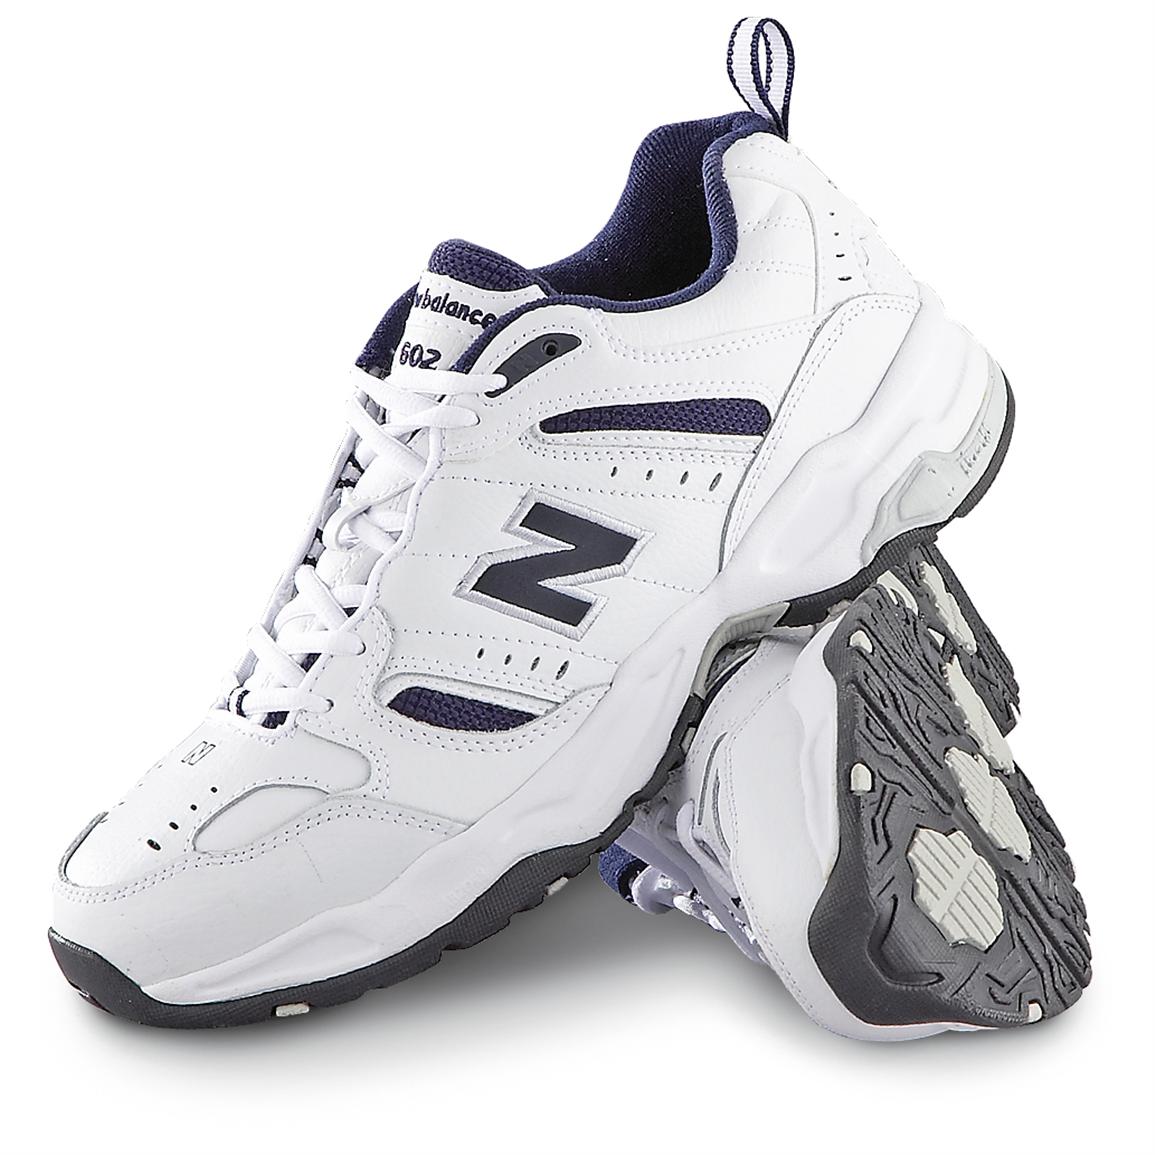 Men's New Balance® 602 Athletic Shoes, White / Navy - 190904, Running ...